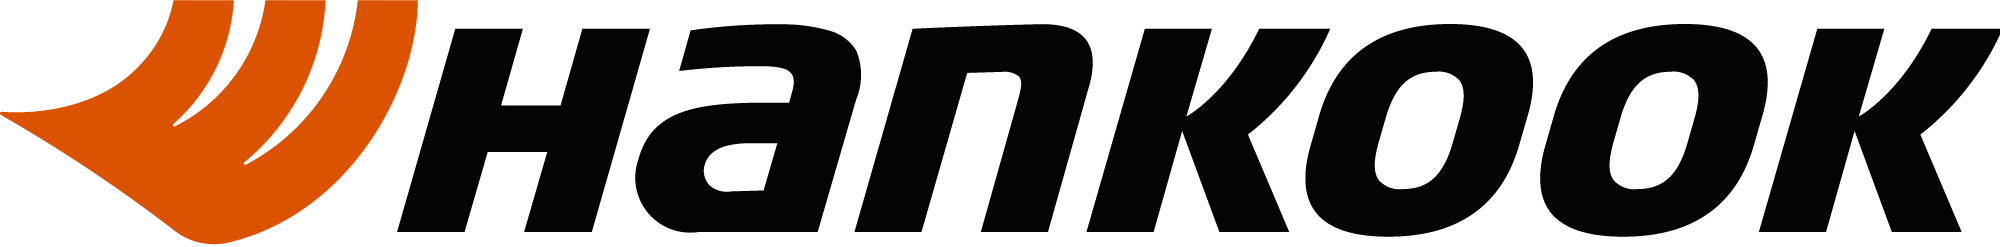 hankook-logo-transparent